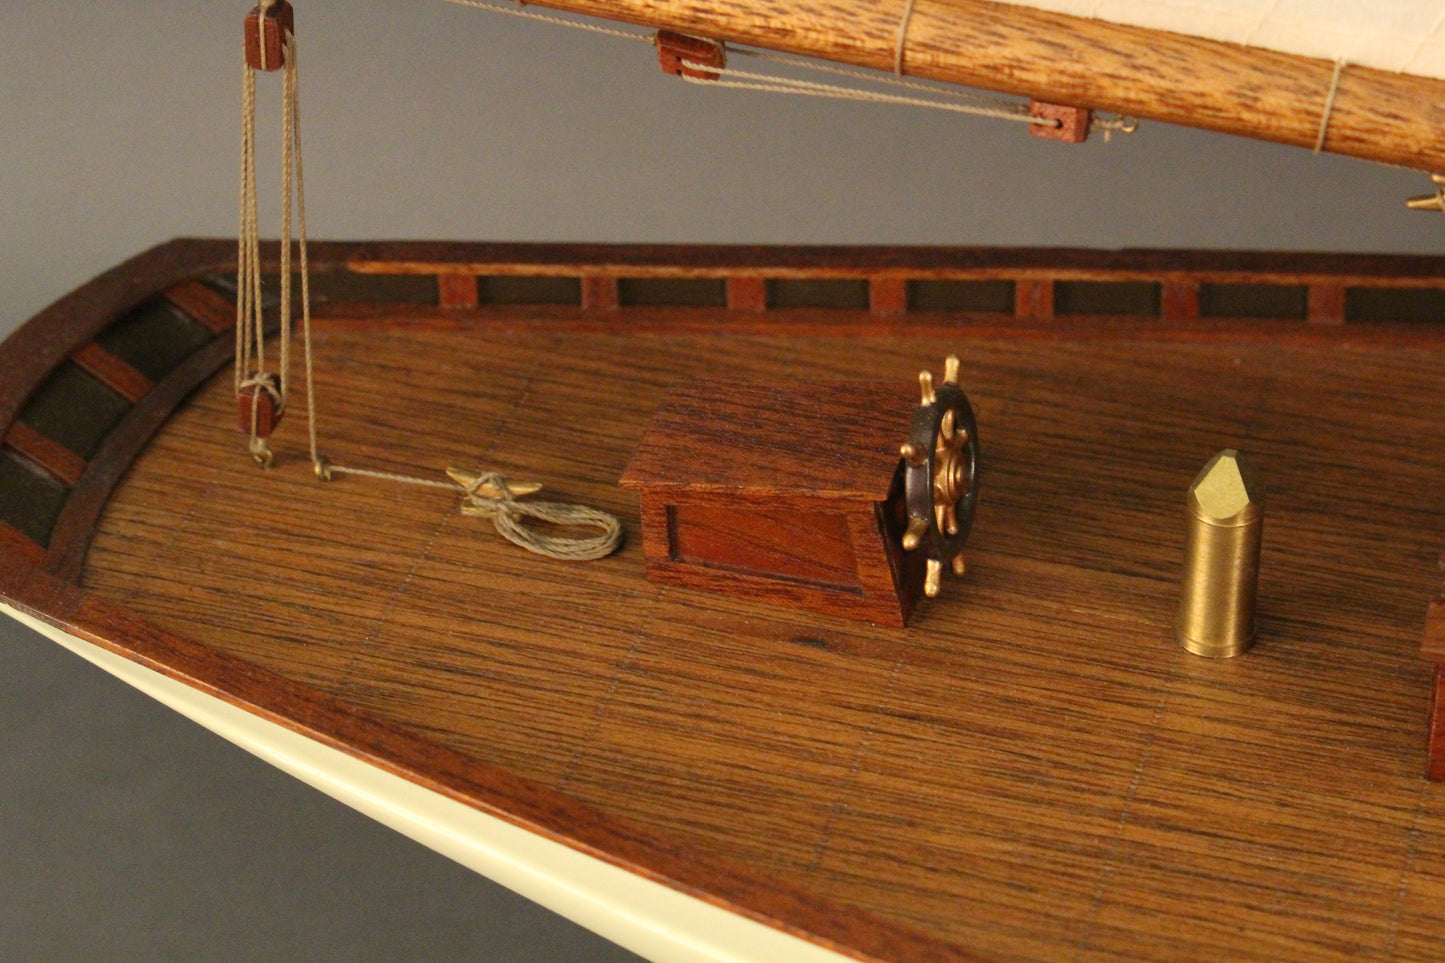 Puritan | America's Cup Defender | Boston Built | 1885 - Lannan Gallery